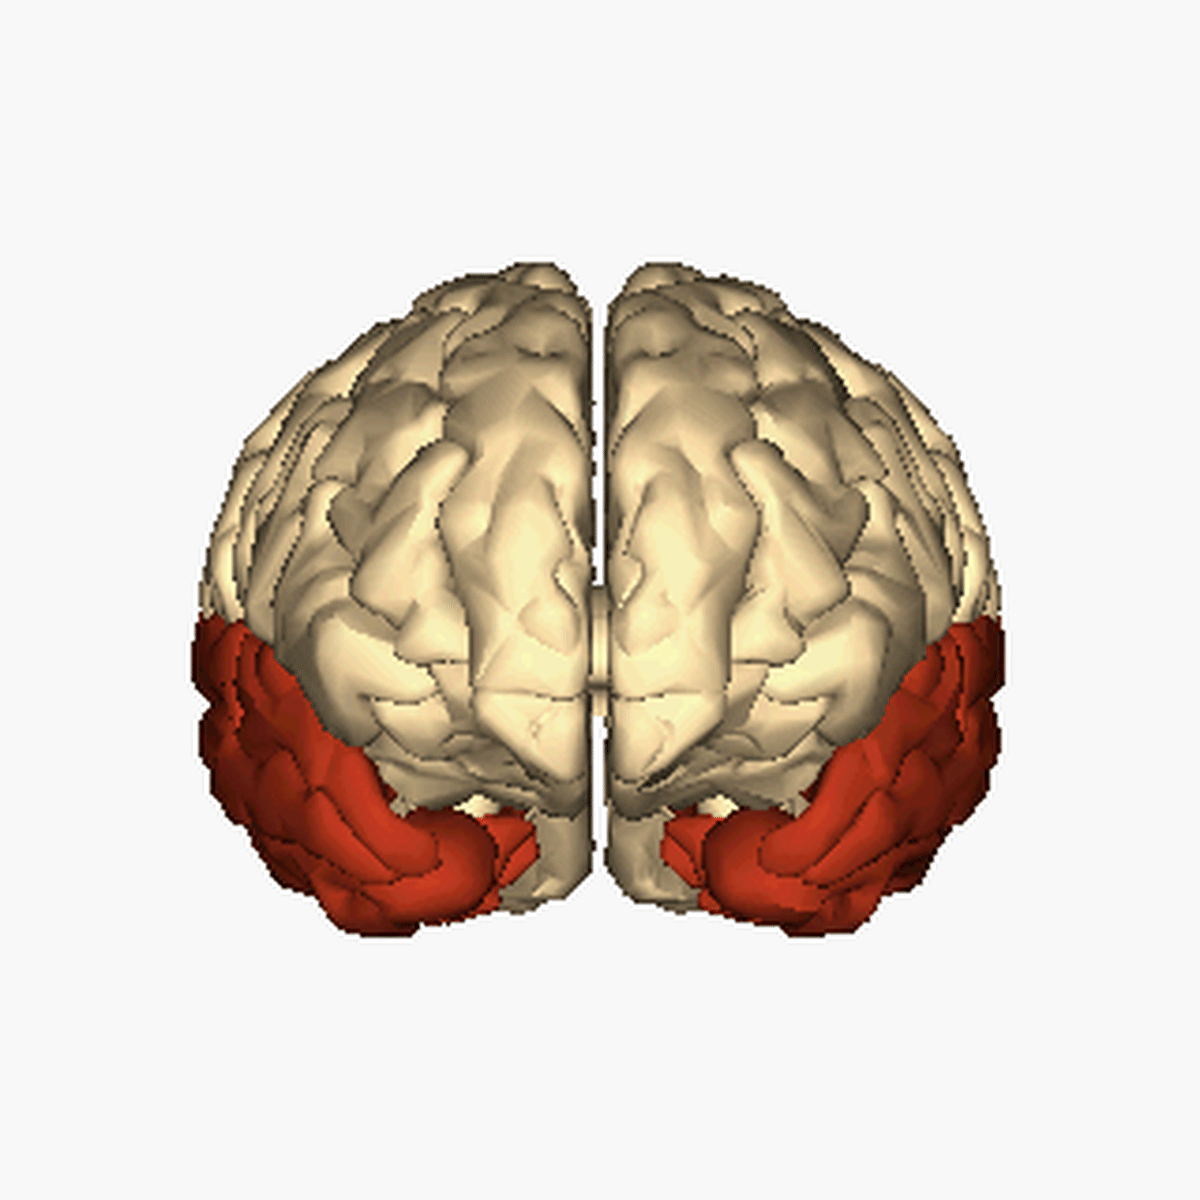 temporal lobes—regions of cerebral hemispheres